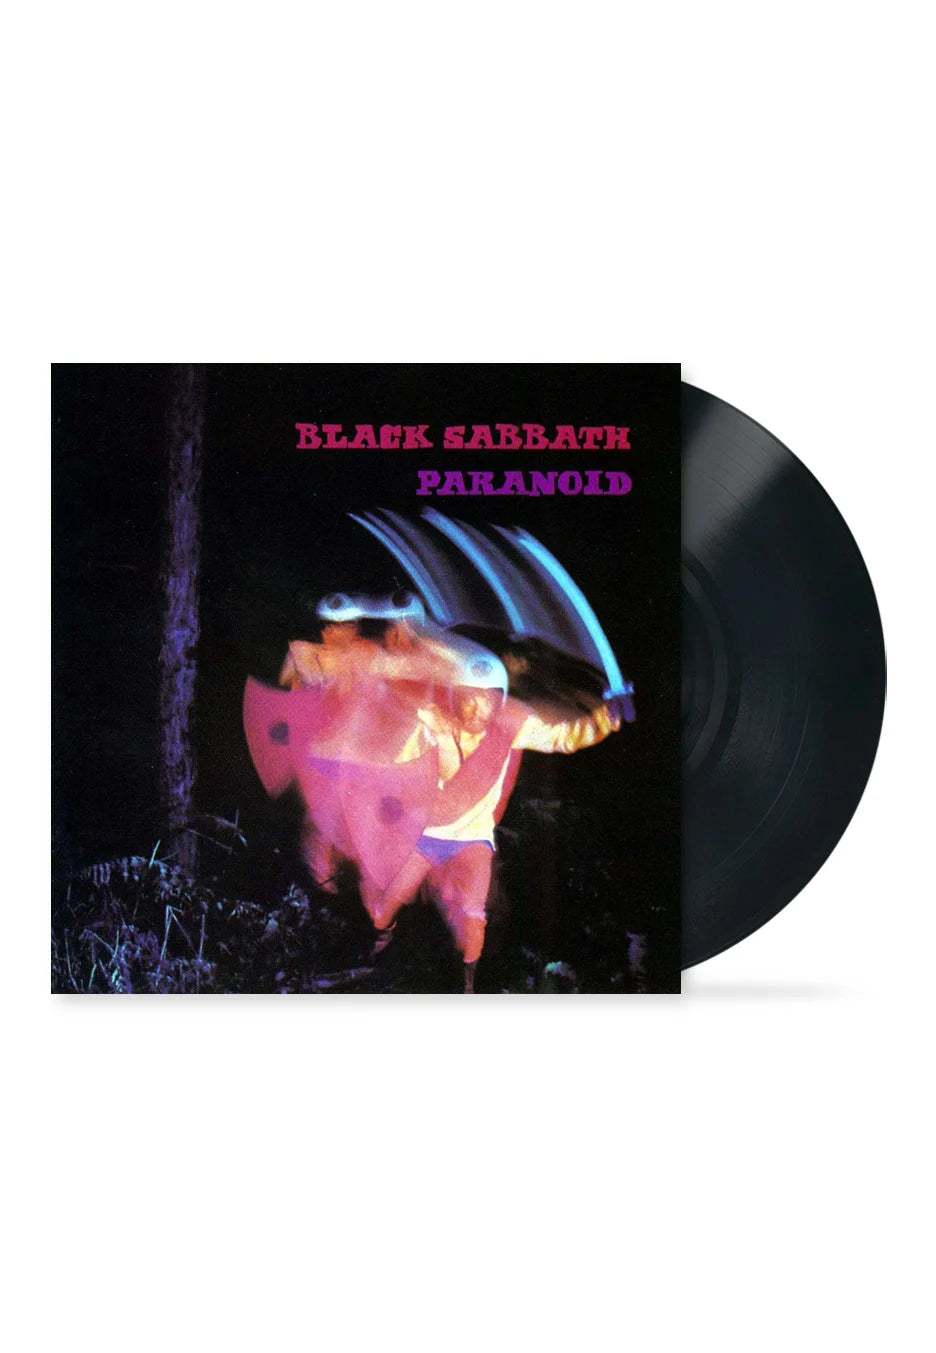 Black Sabbath - Paranoid "50th Anniversary" (180g on Black Vinyl)